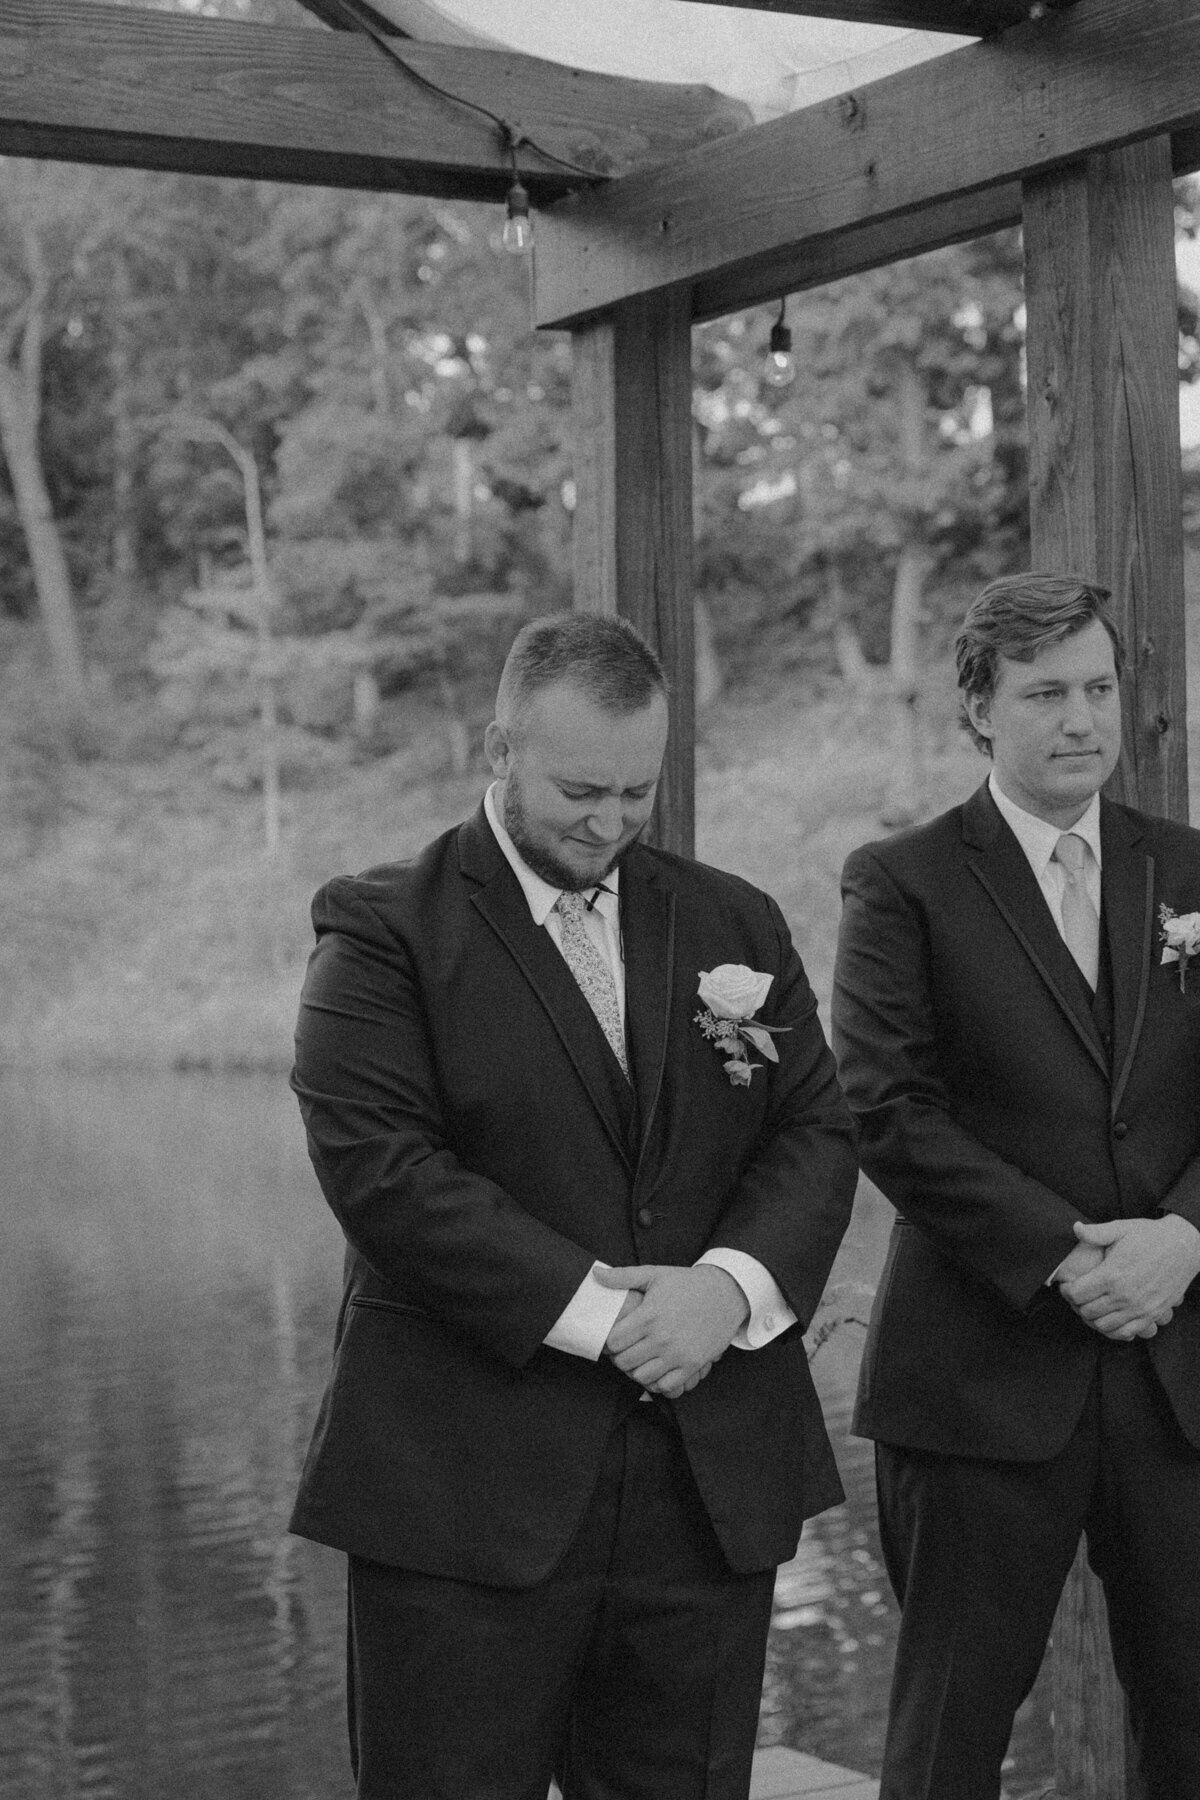 Kentucky Wedding Photographer, Mt Sterling KY, Mount Sterling KY Wedding Photographer